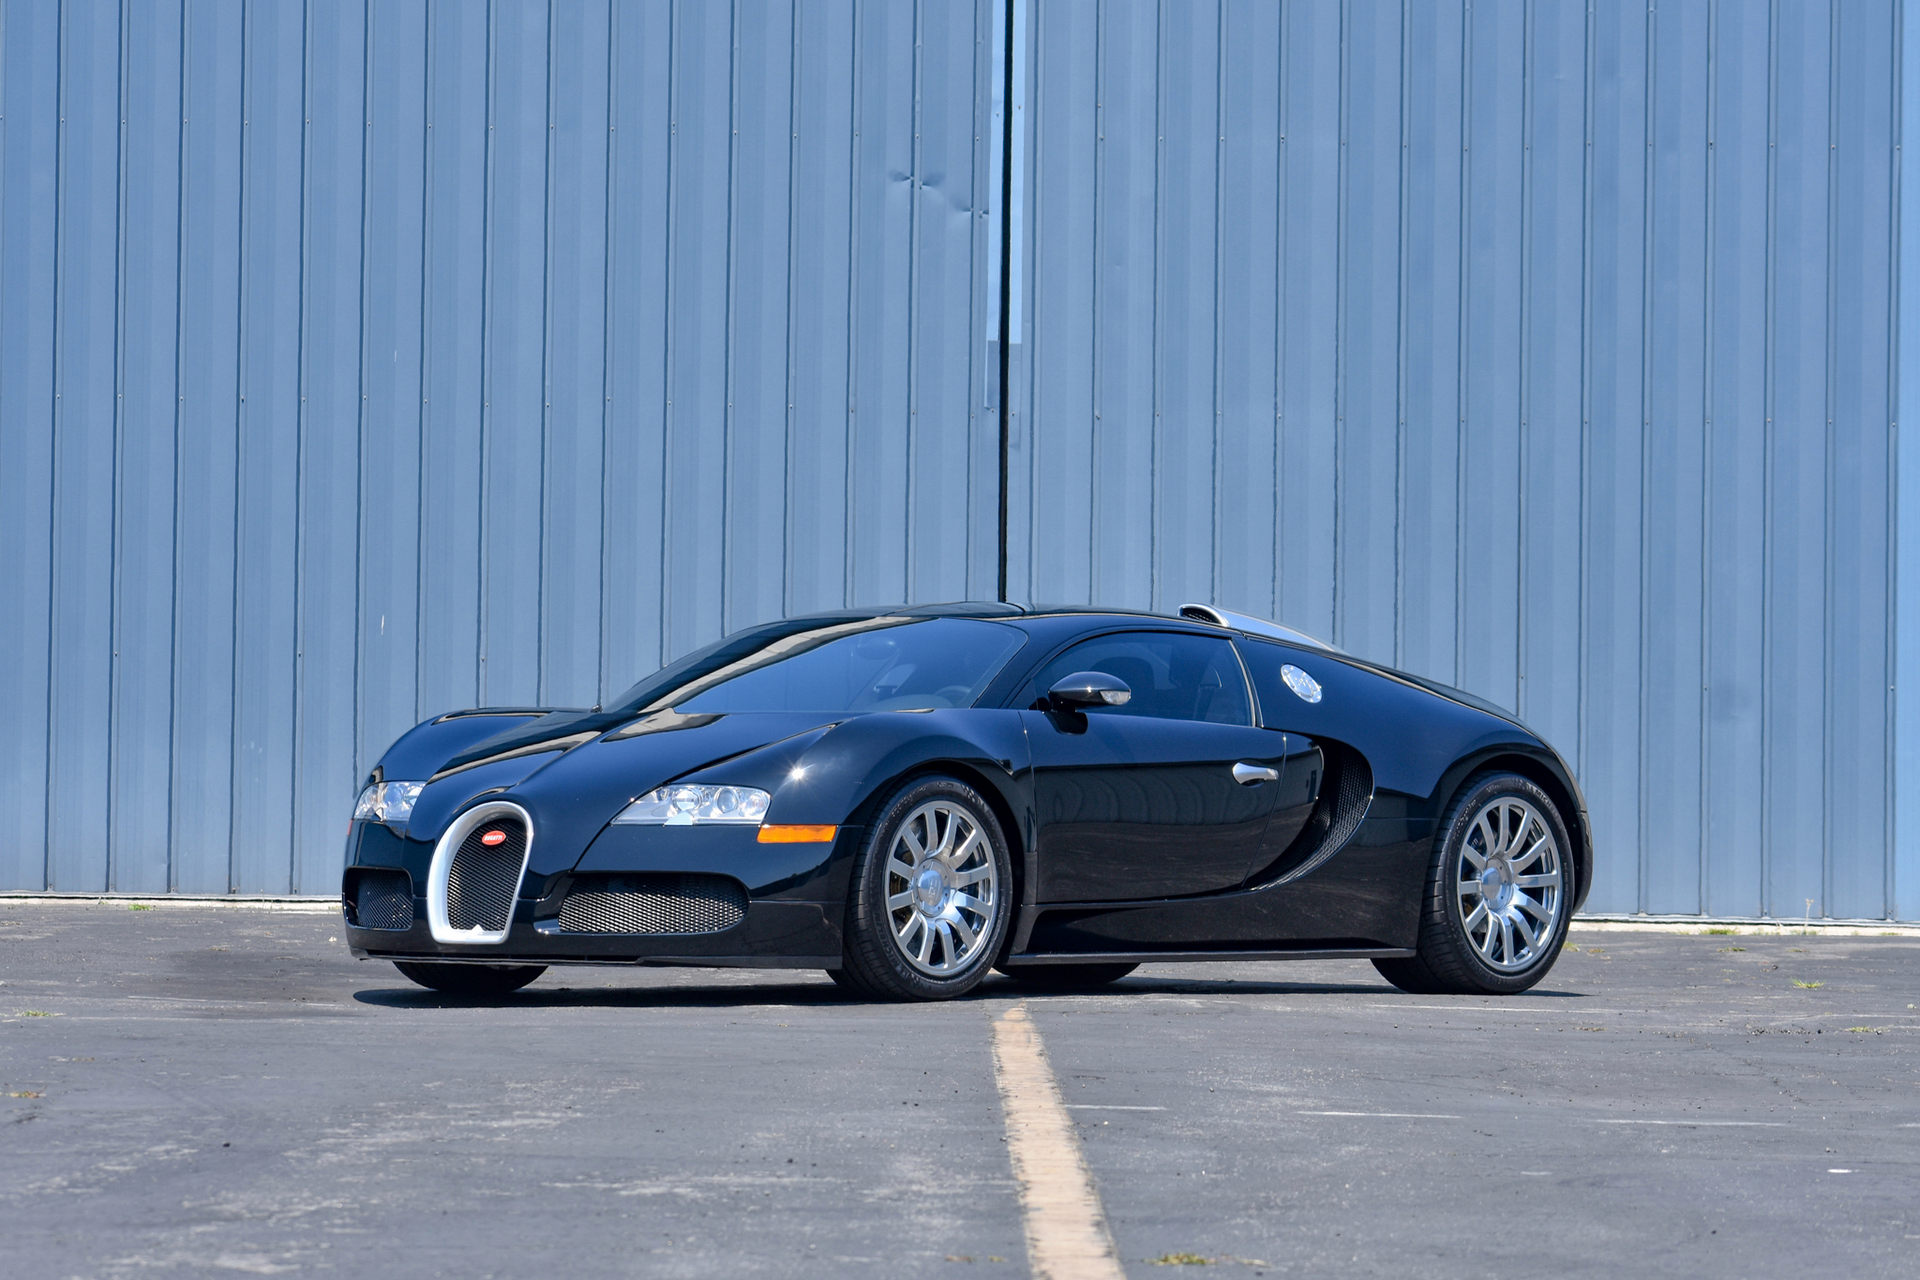 Legenda top speed 400km/j- Bugatti Veyron 16.4 Coupe kini dilelong